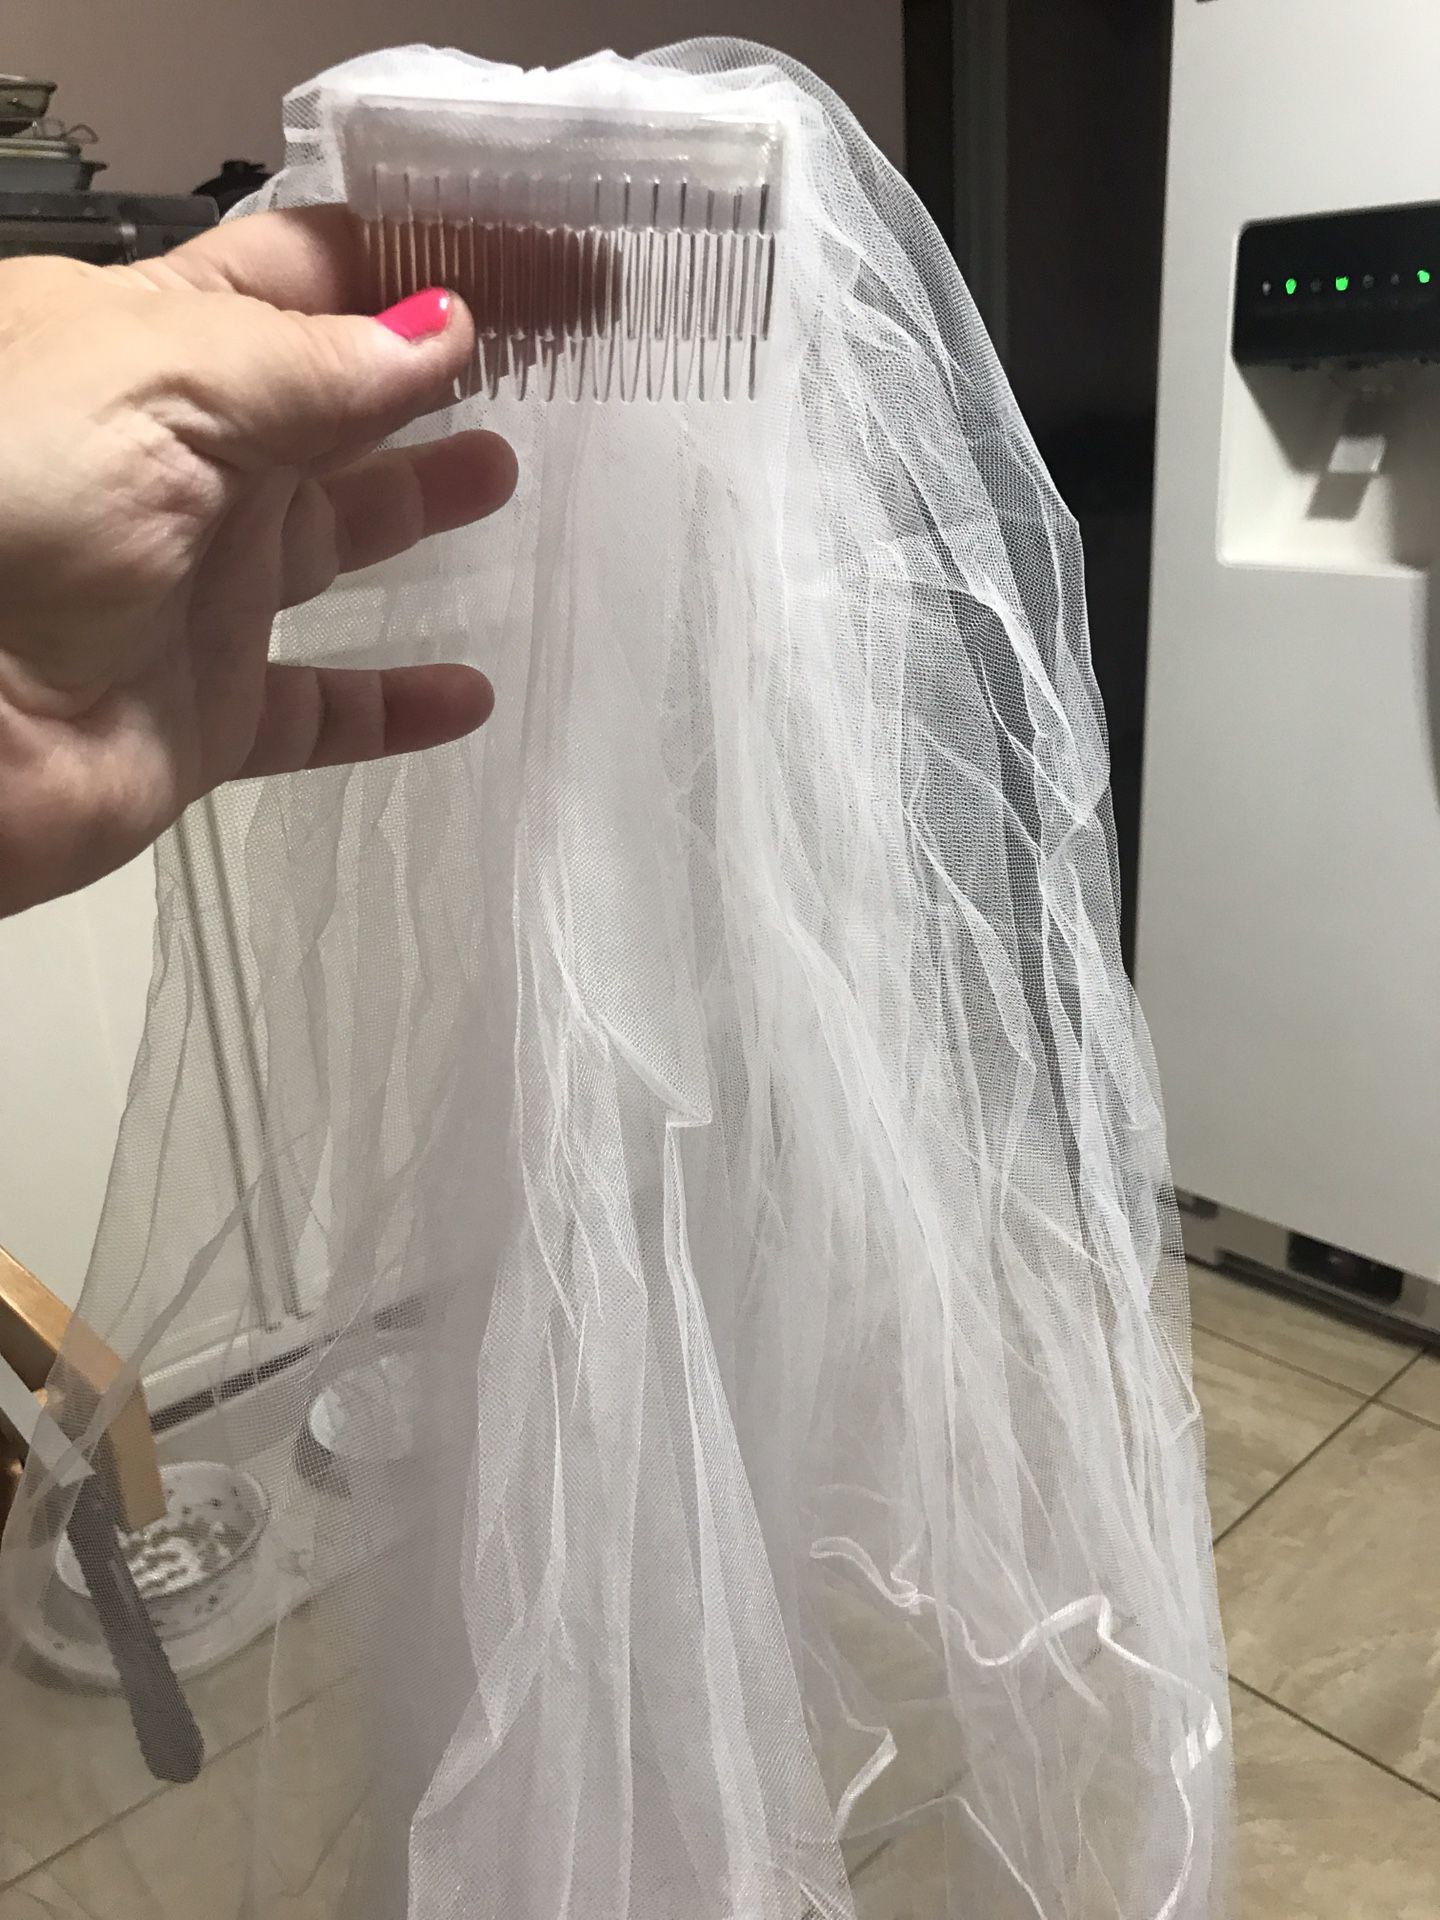 New Wedding Veil $8